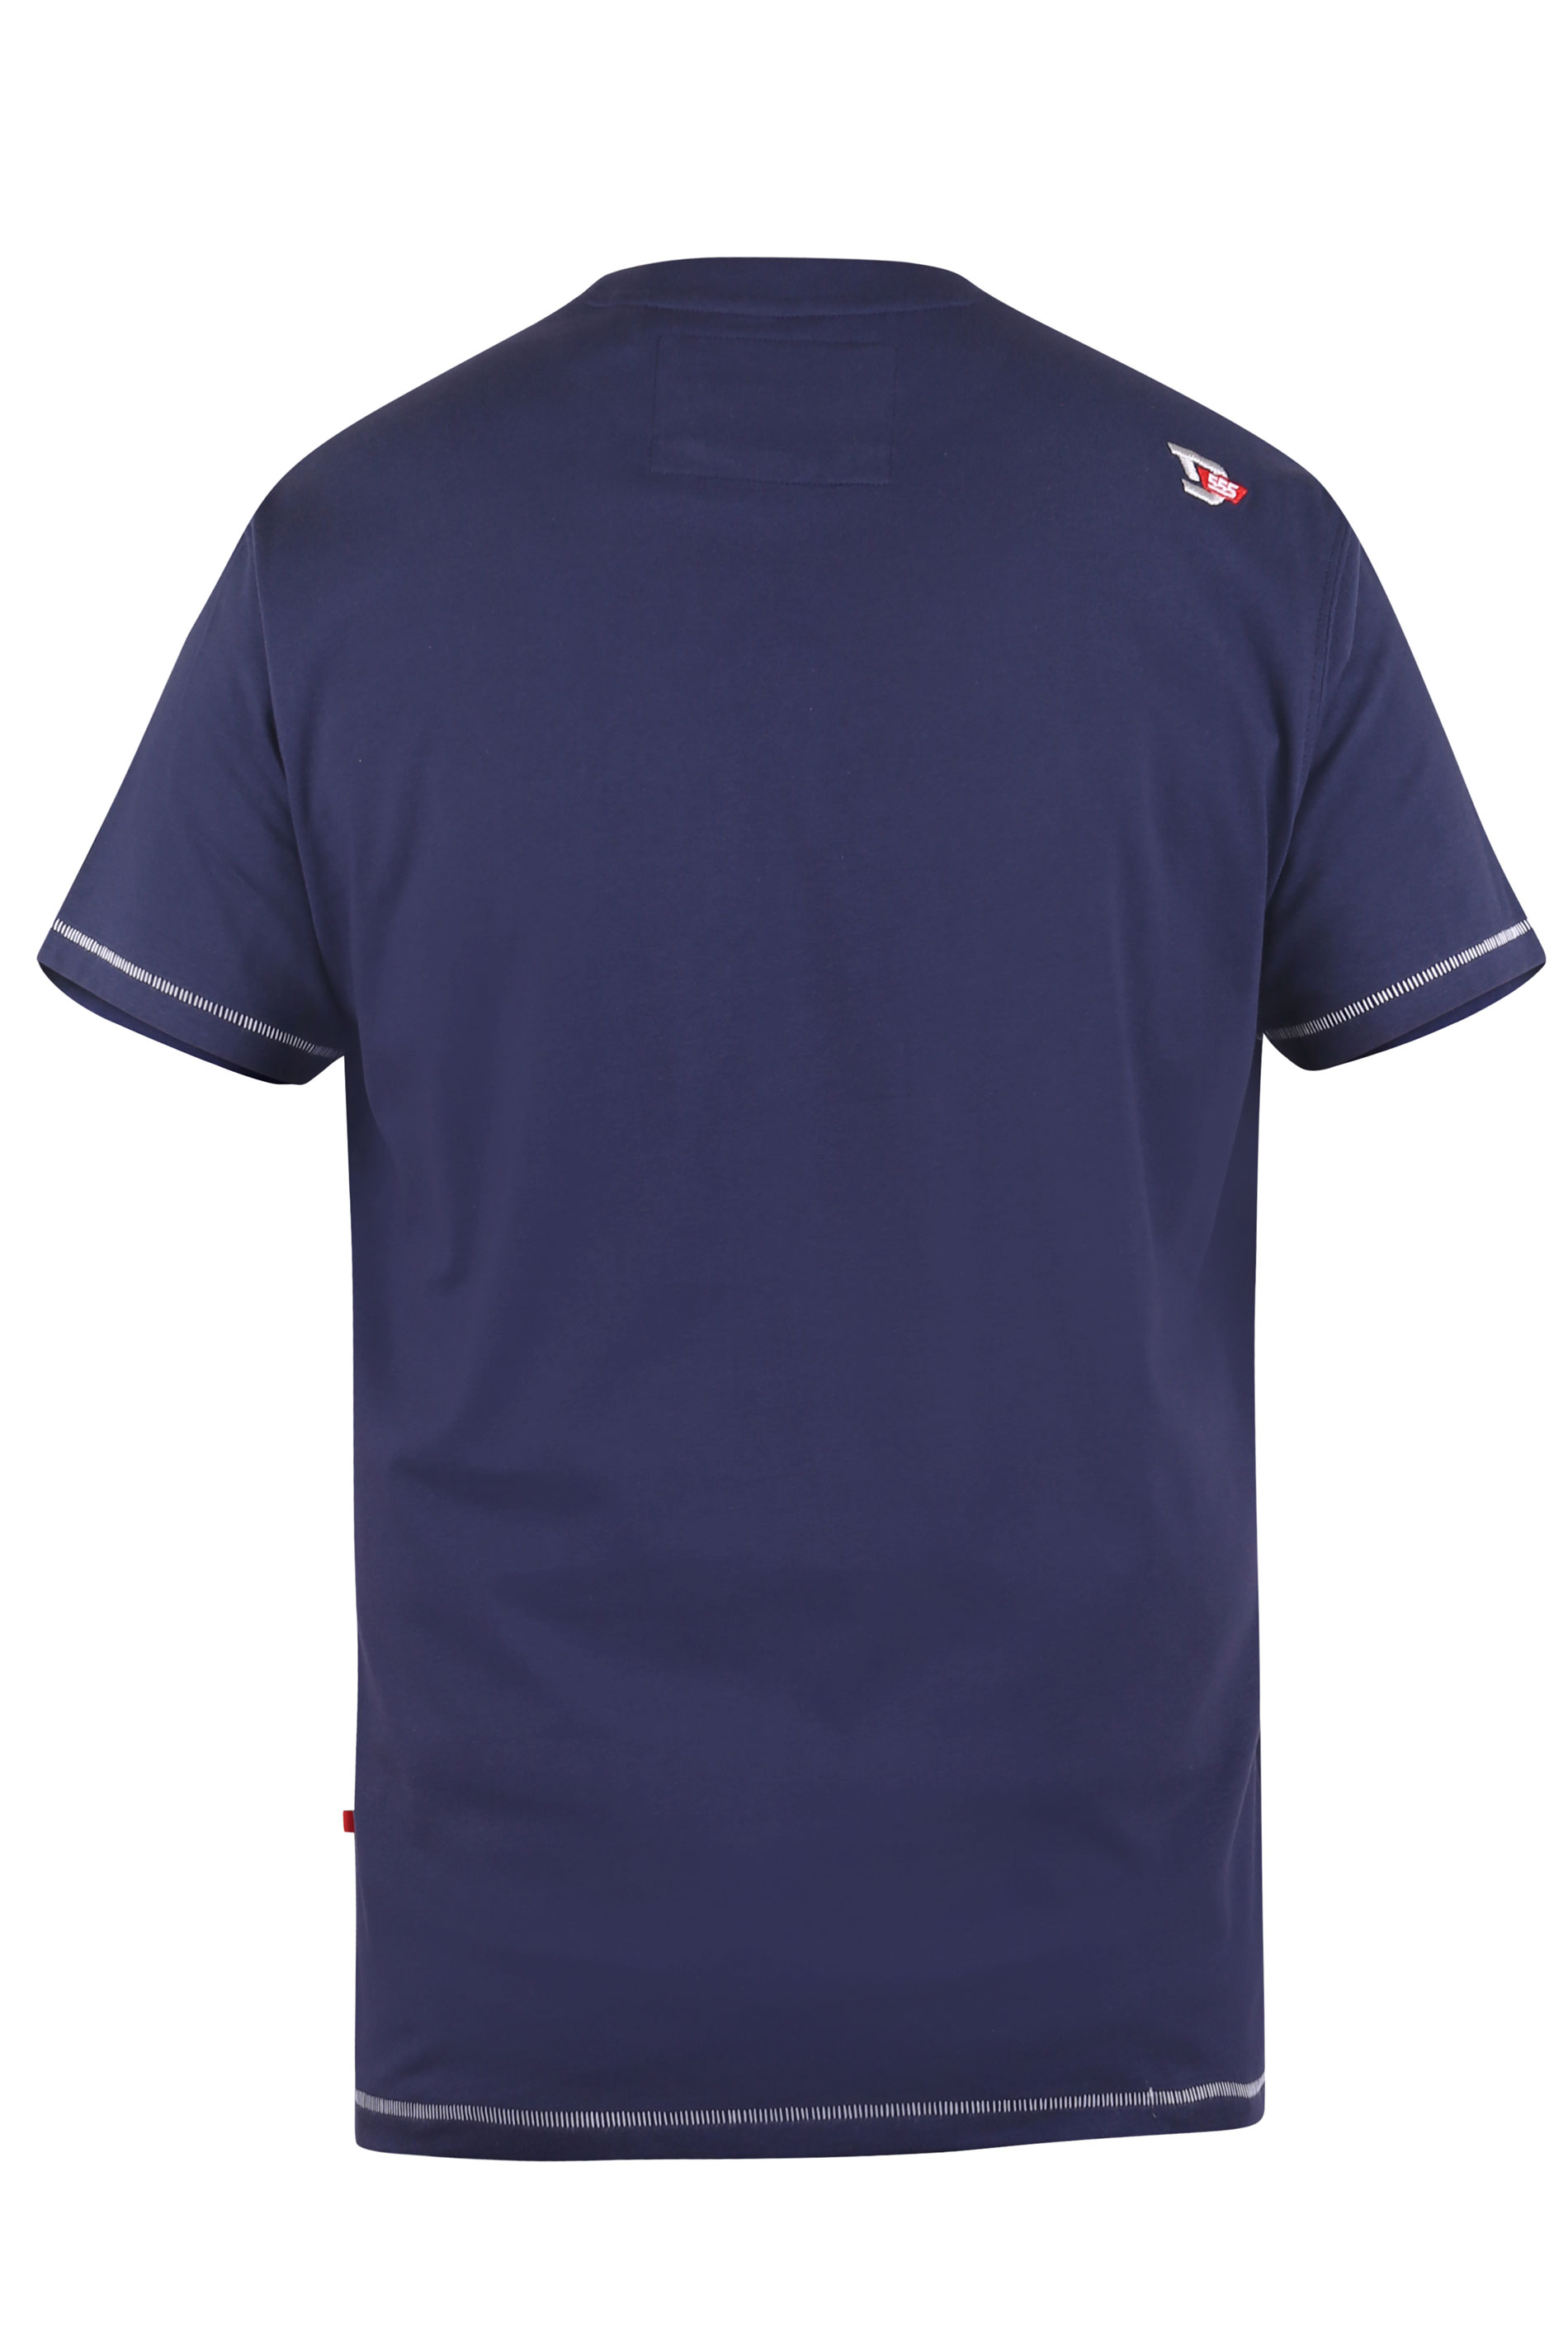 D555 Navy Blue 'Nautical Supplies' Printed T-Shirt | BadRhino 3